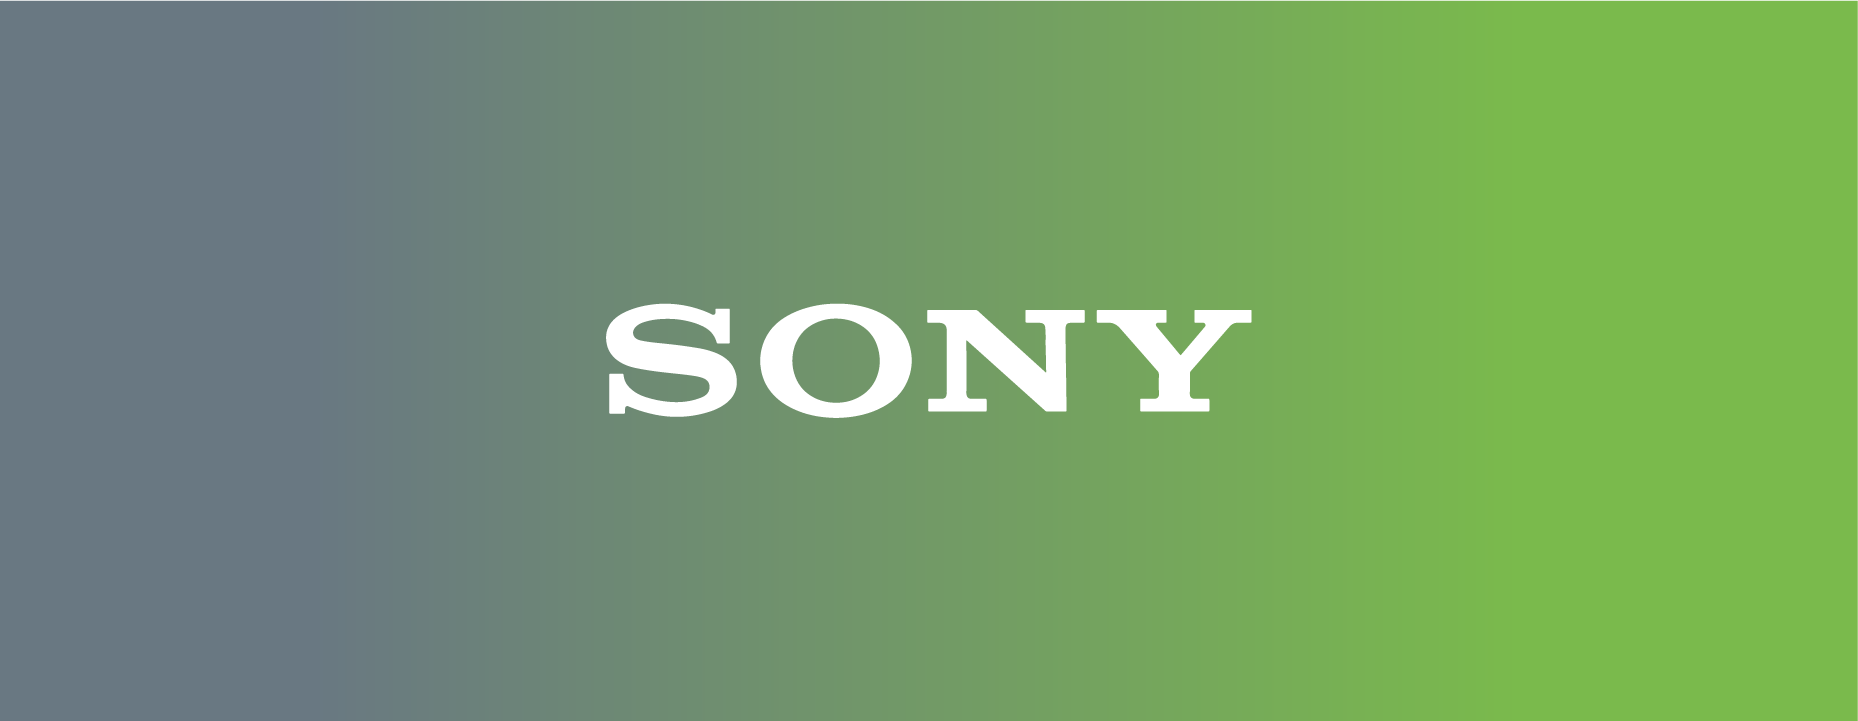 sony-banner-brand-logo